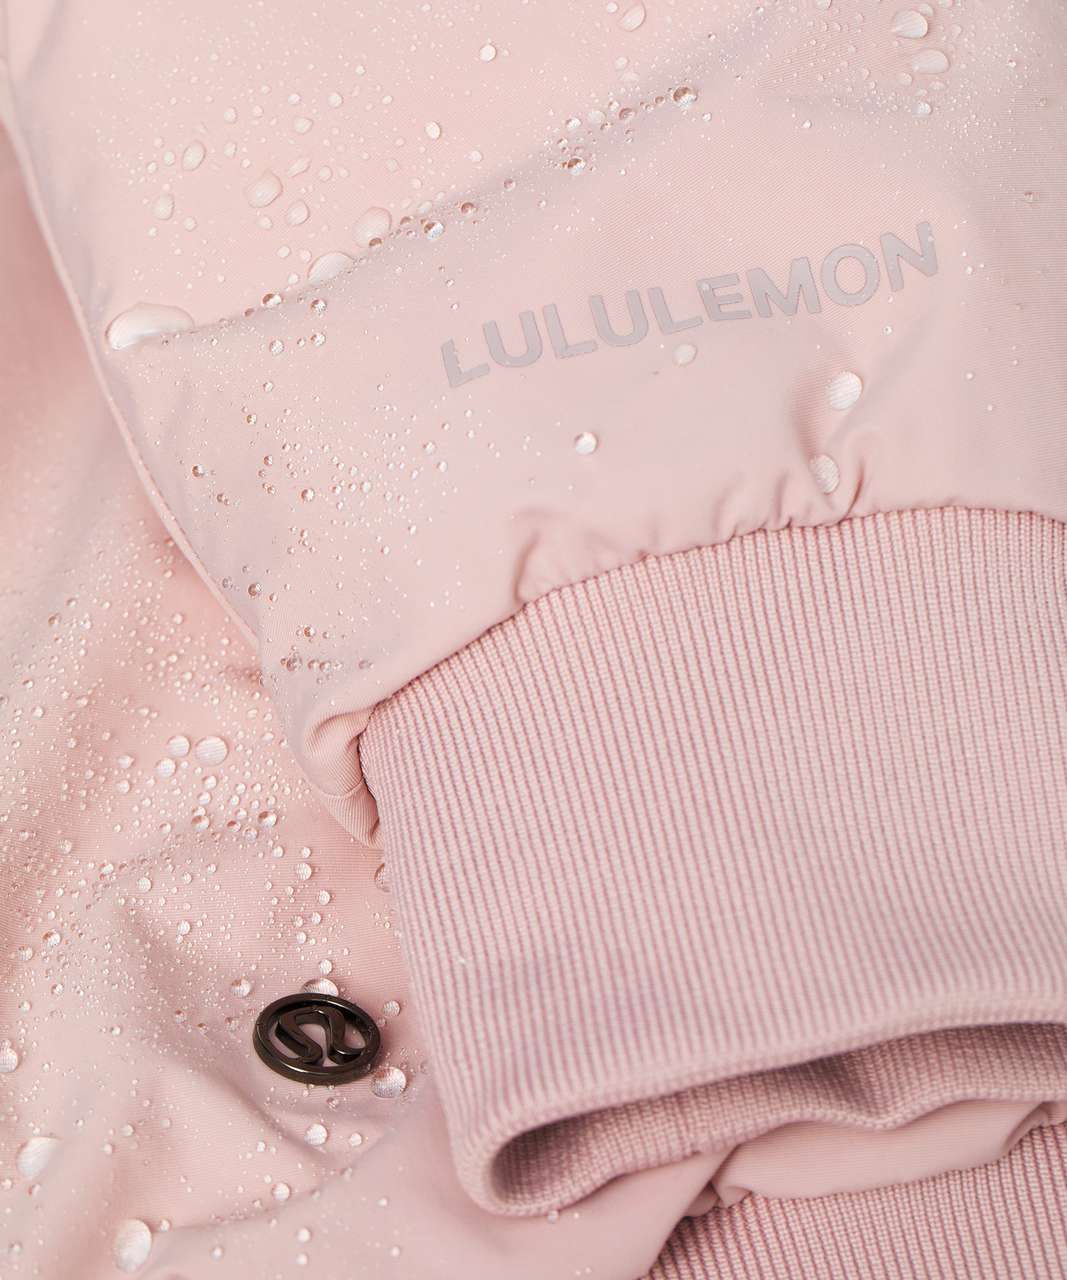 Lululemon Winter Warrior Bomber - Porcelain Pink